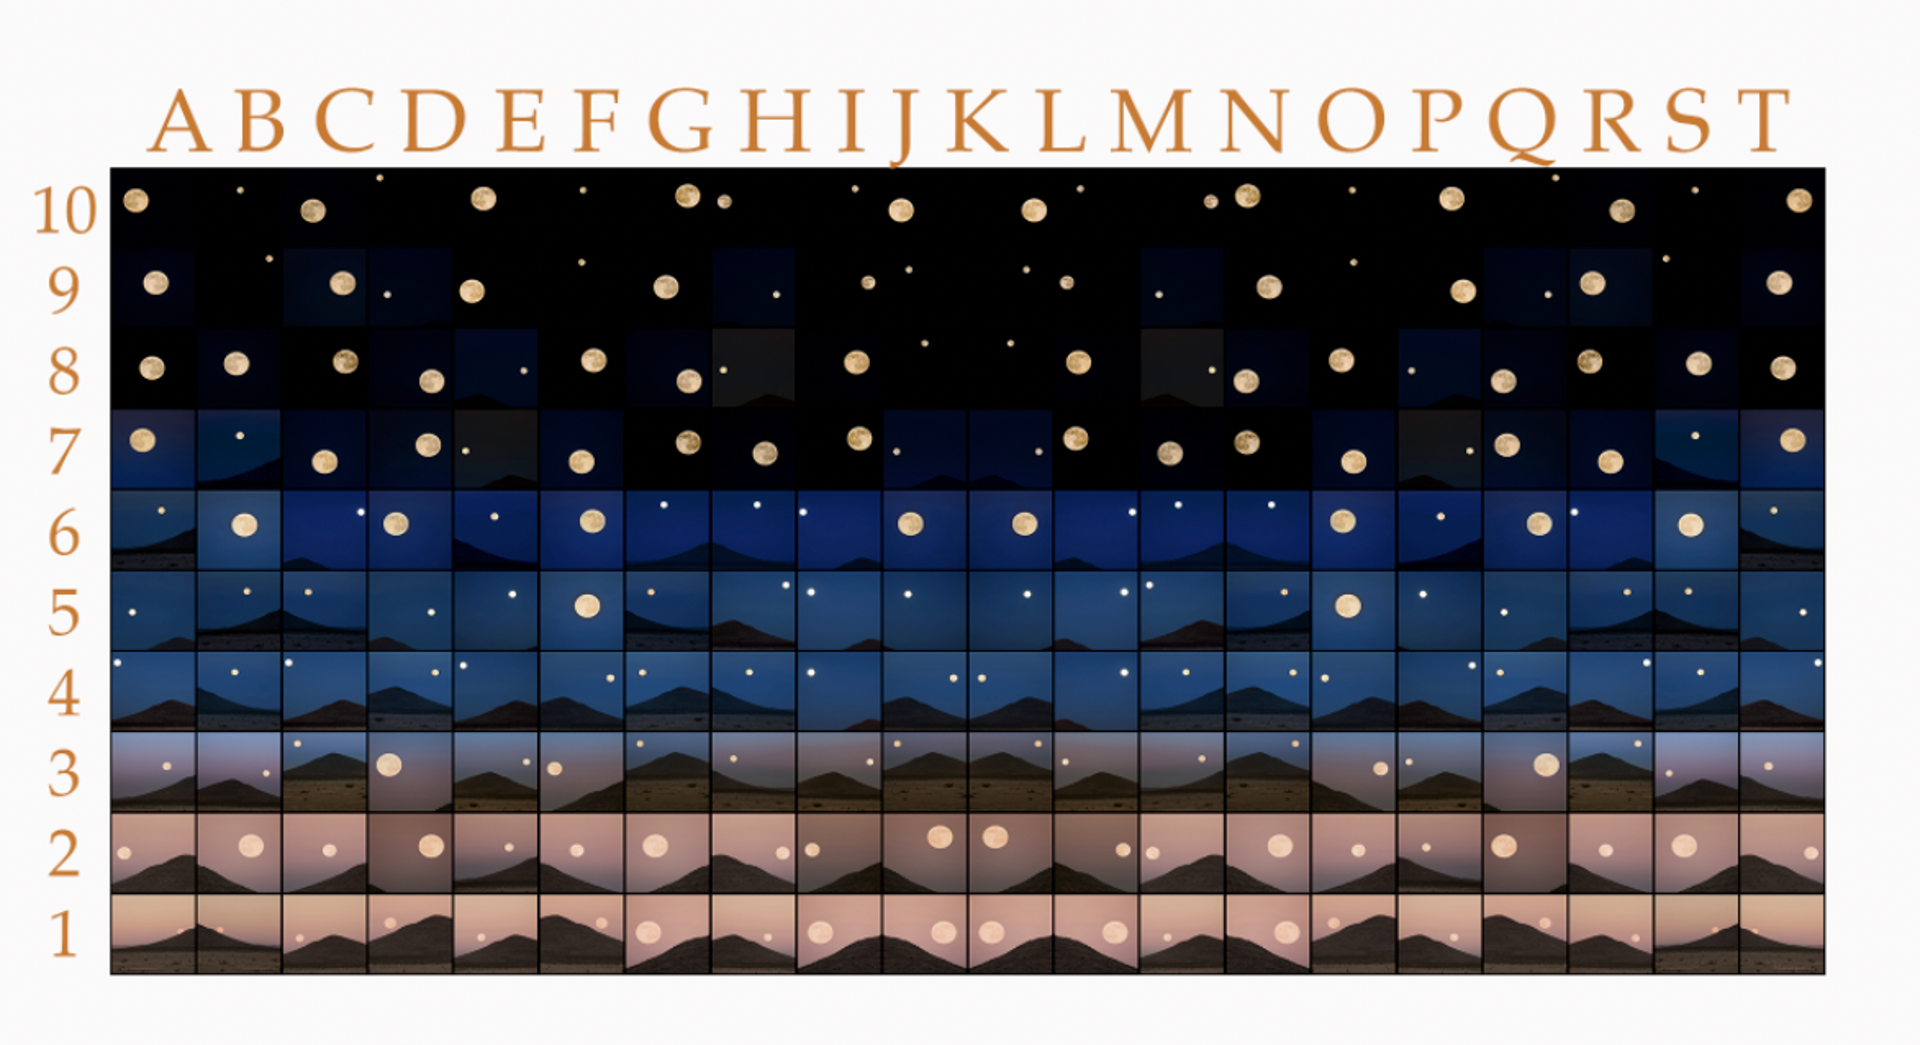 200 Moons Individual Panels by E. Dan Klepper